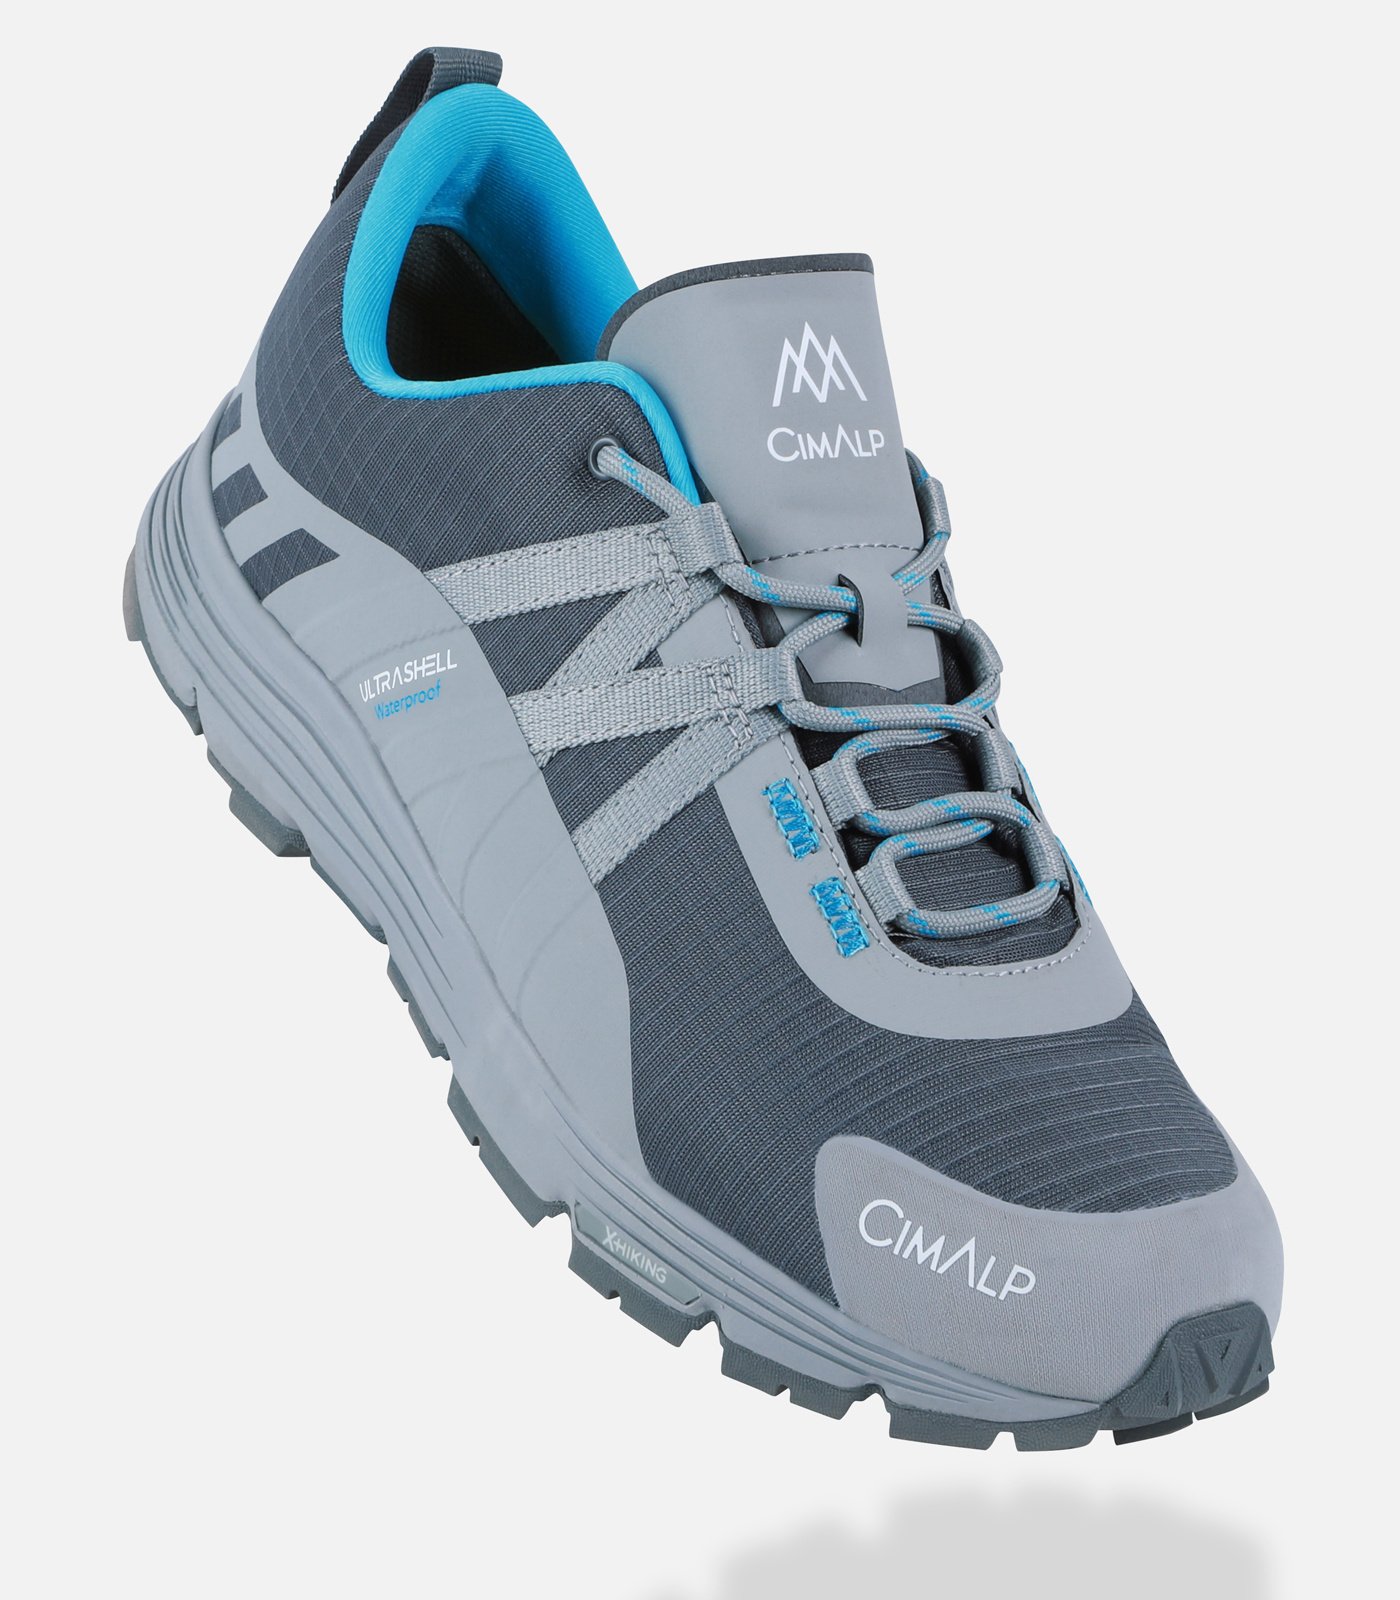 Zapatillas de senderismo impermeables con suela Vibram® | Cimalp